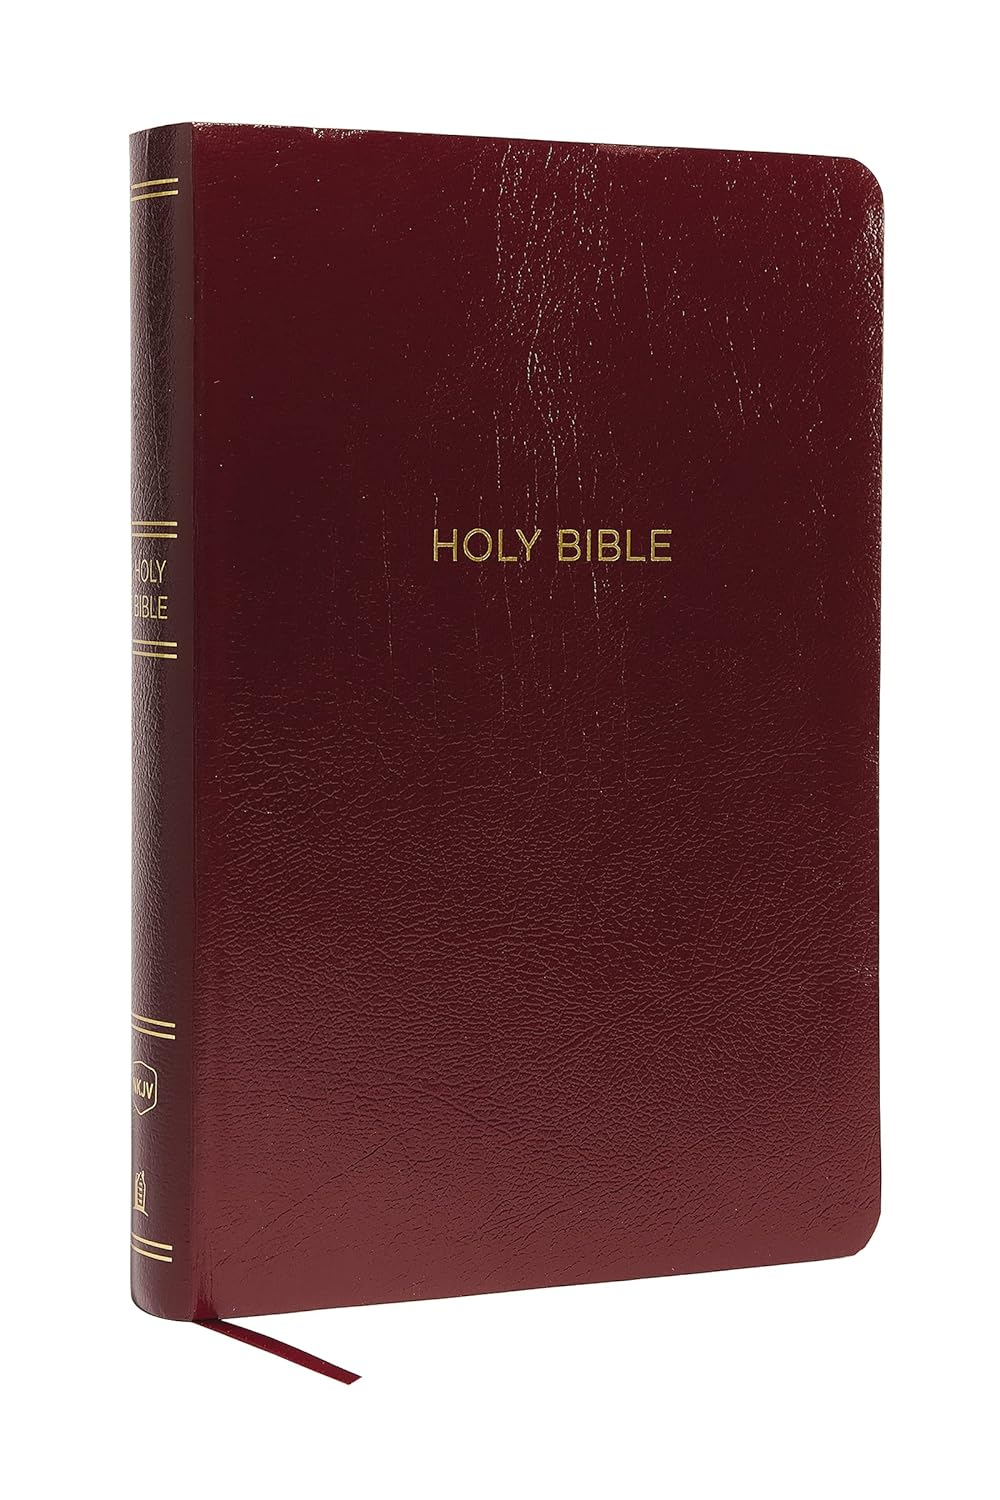 Clearance sale 2024! NKJV REFERENCE BIBLE SUPER GIANT PRINT BRG LF: Holy Bible, New King James Version Imitation Leather – Import